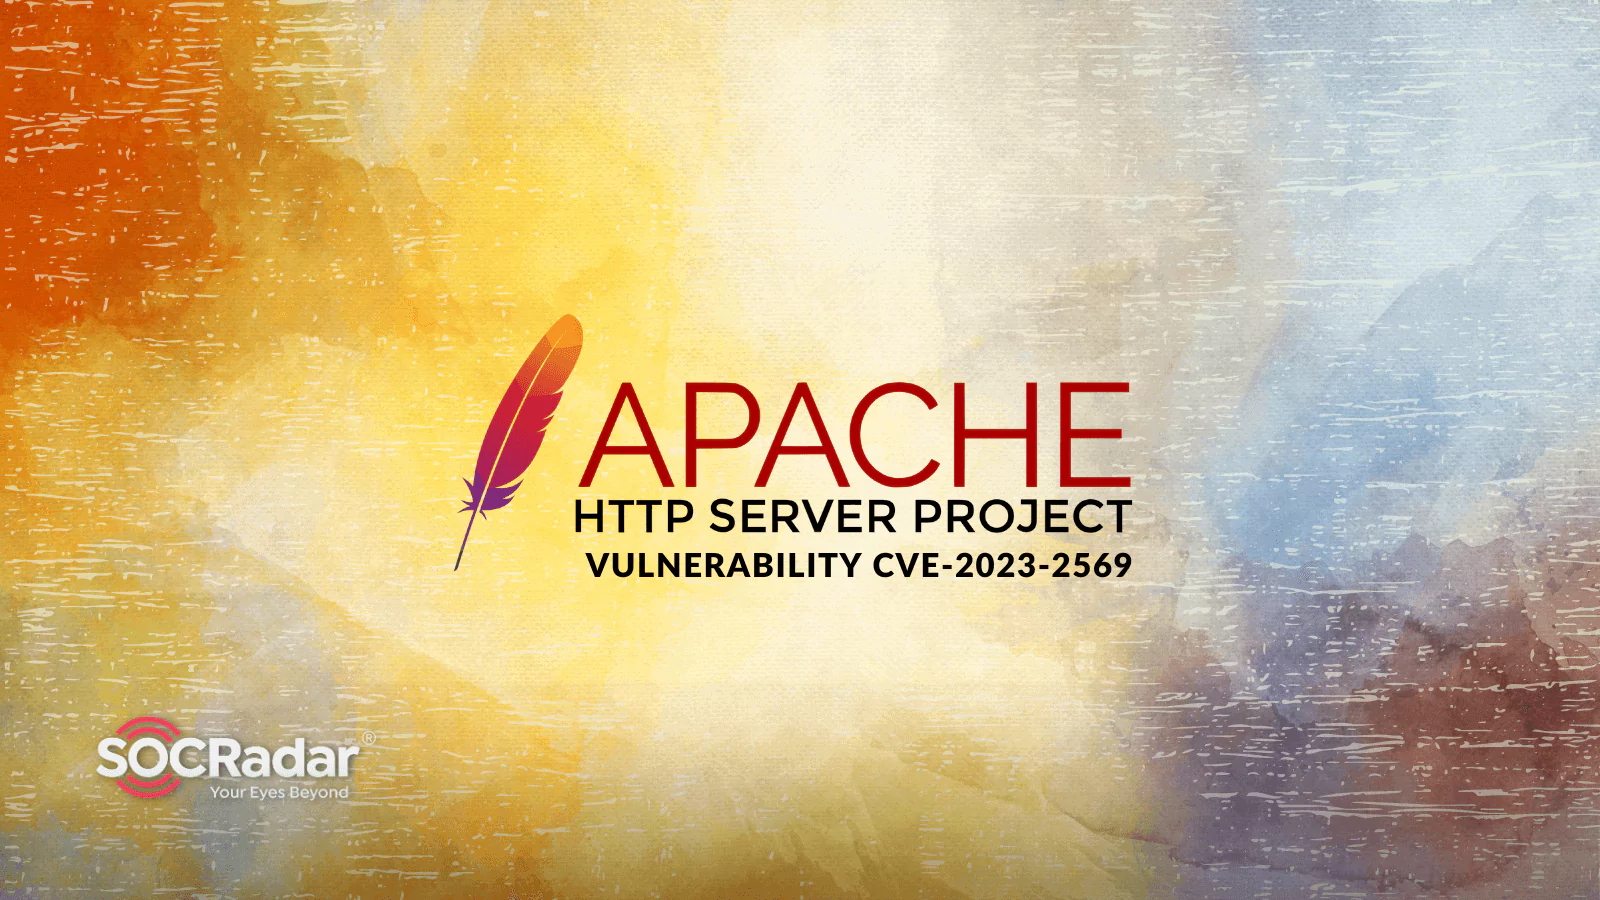 Apache HTTP Server Vulnerability CVE202325690 PoC Available